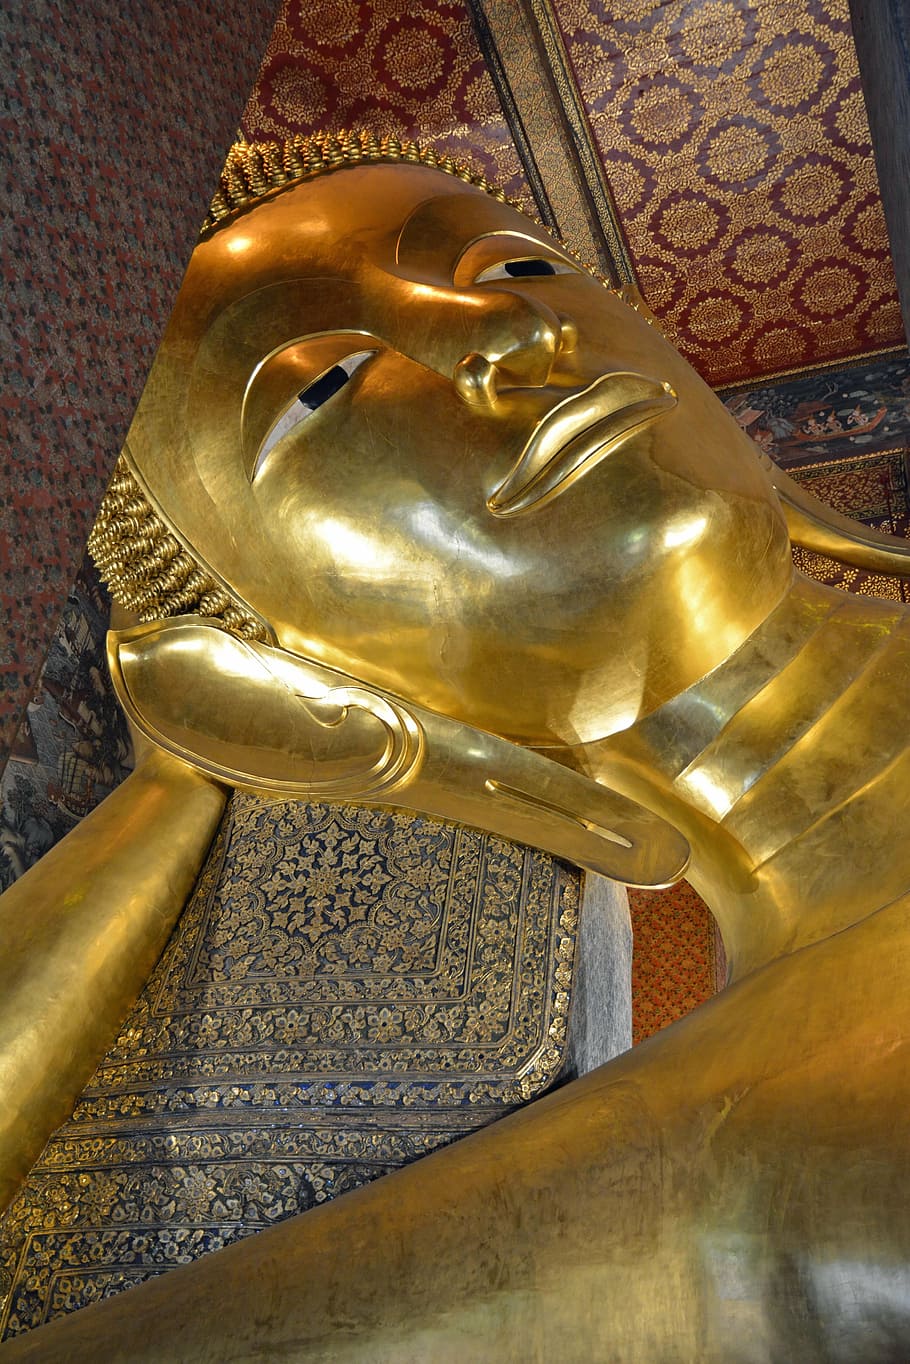 thailand, bangkok, berbaring buddha, patung, keserupaan pria, kepercayaan, berwarna emas, representasi, agama, representasi manusia